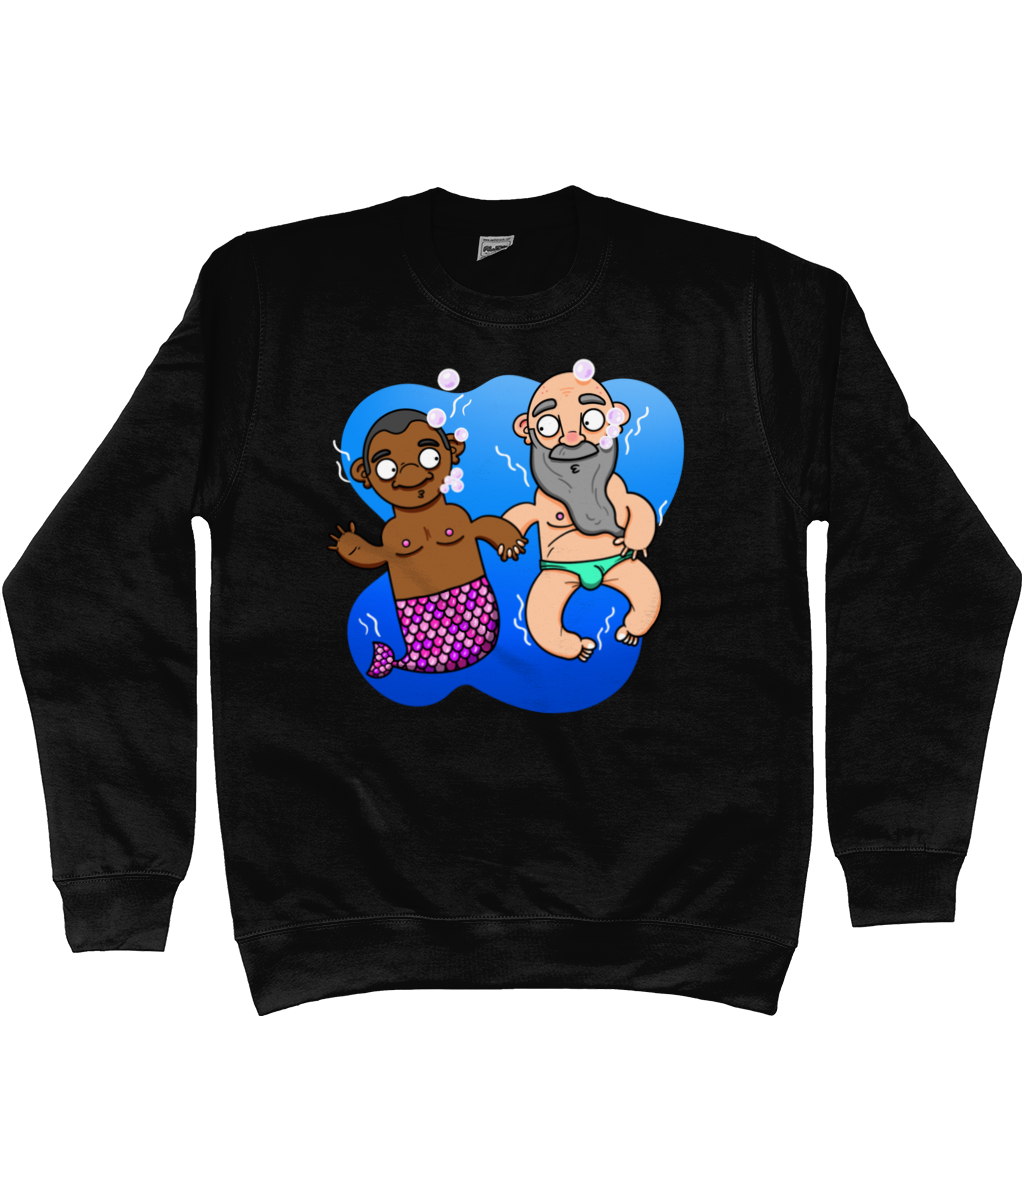 Black gay merman and his boyfriend under the sea on a black sweatshirt